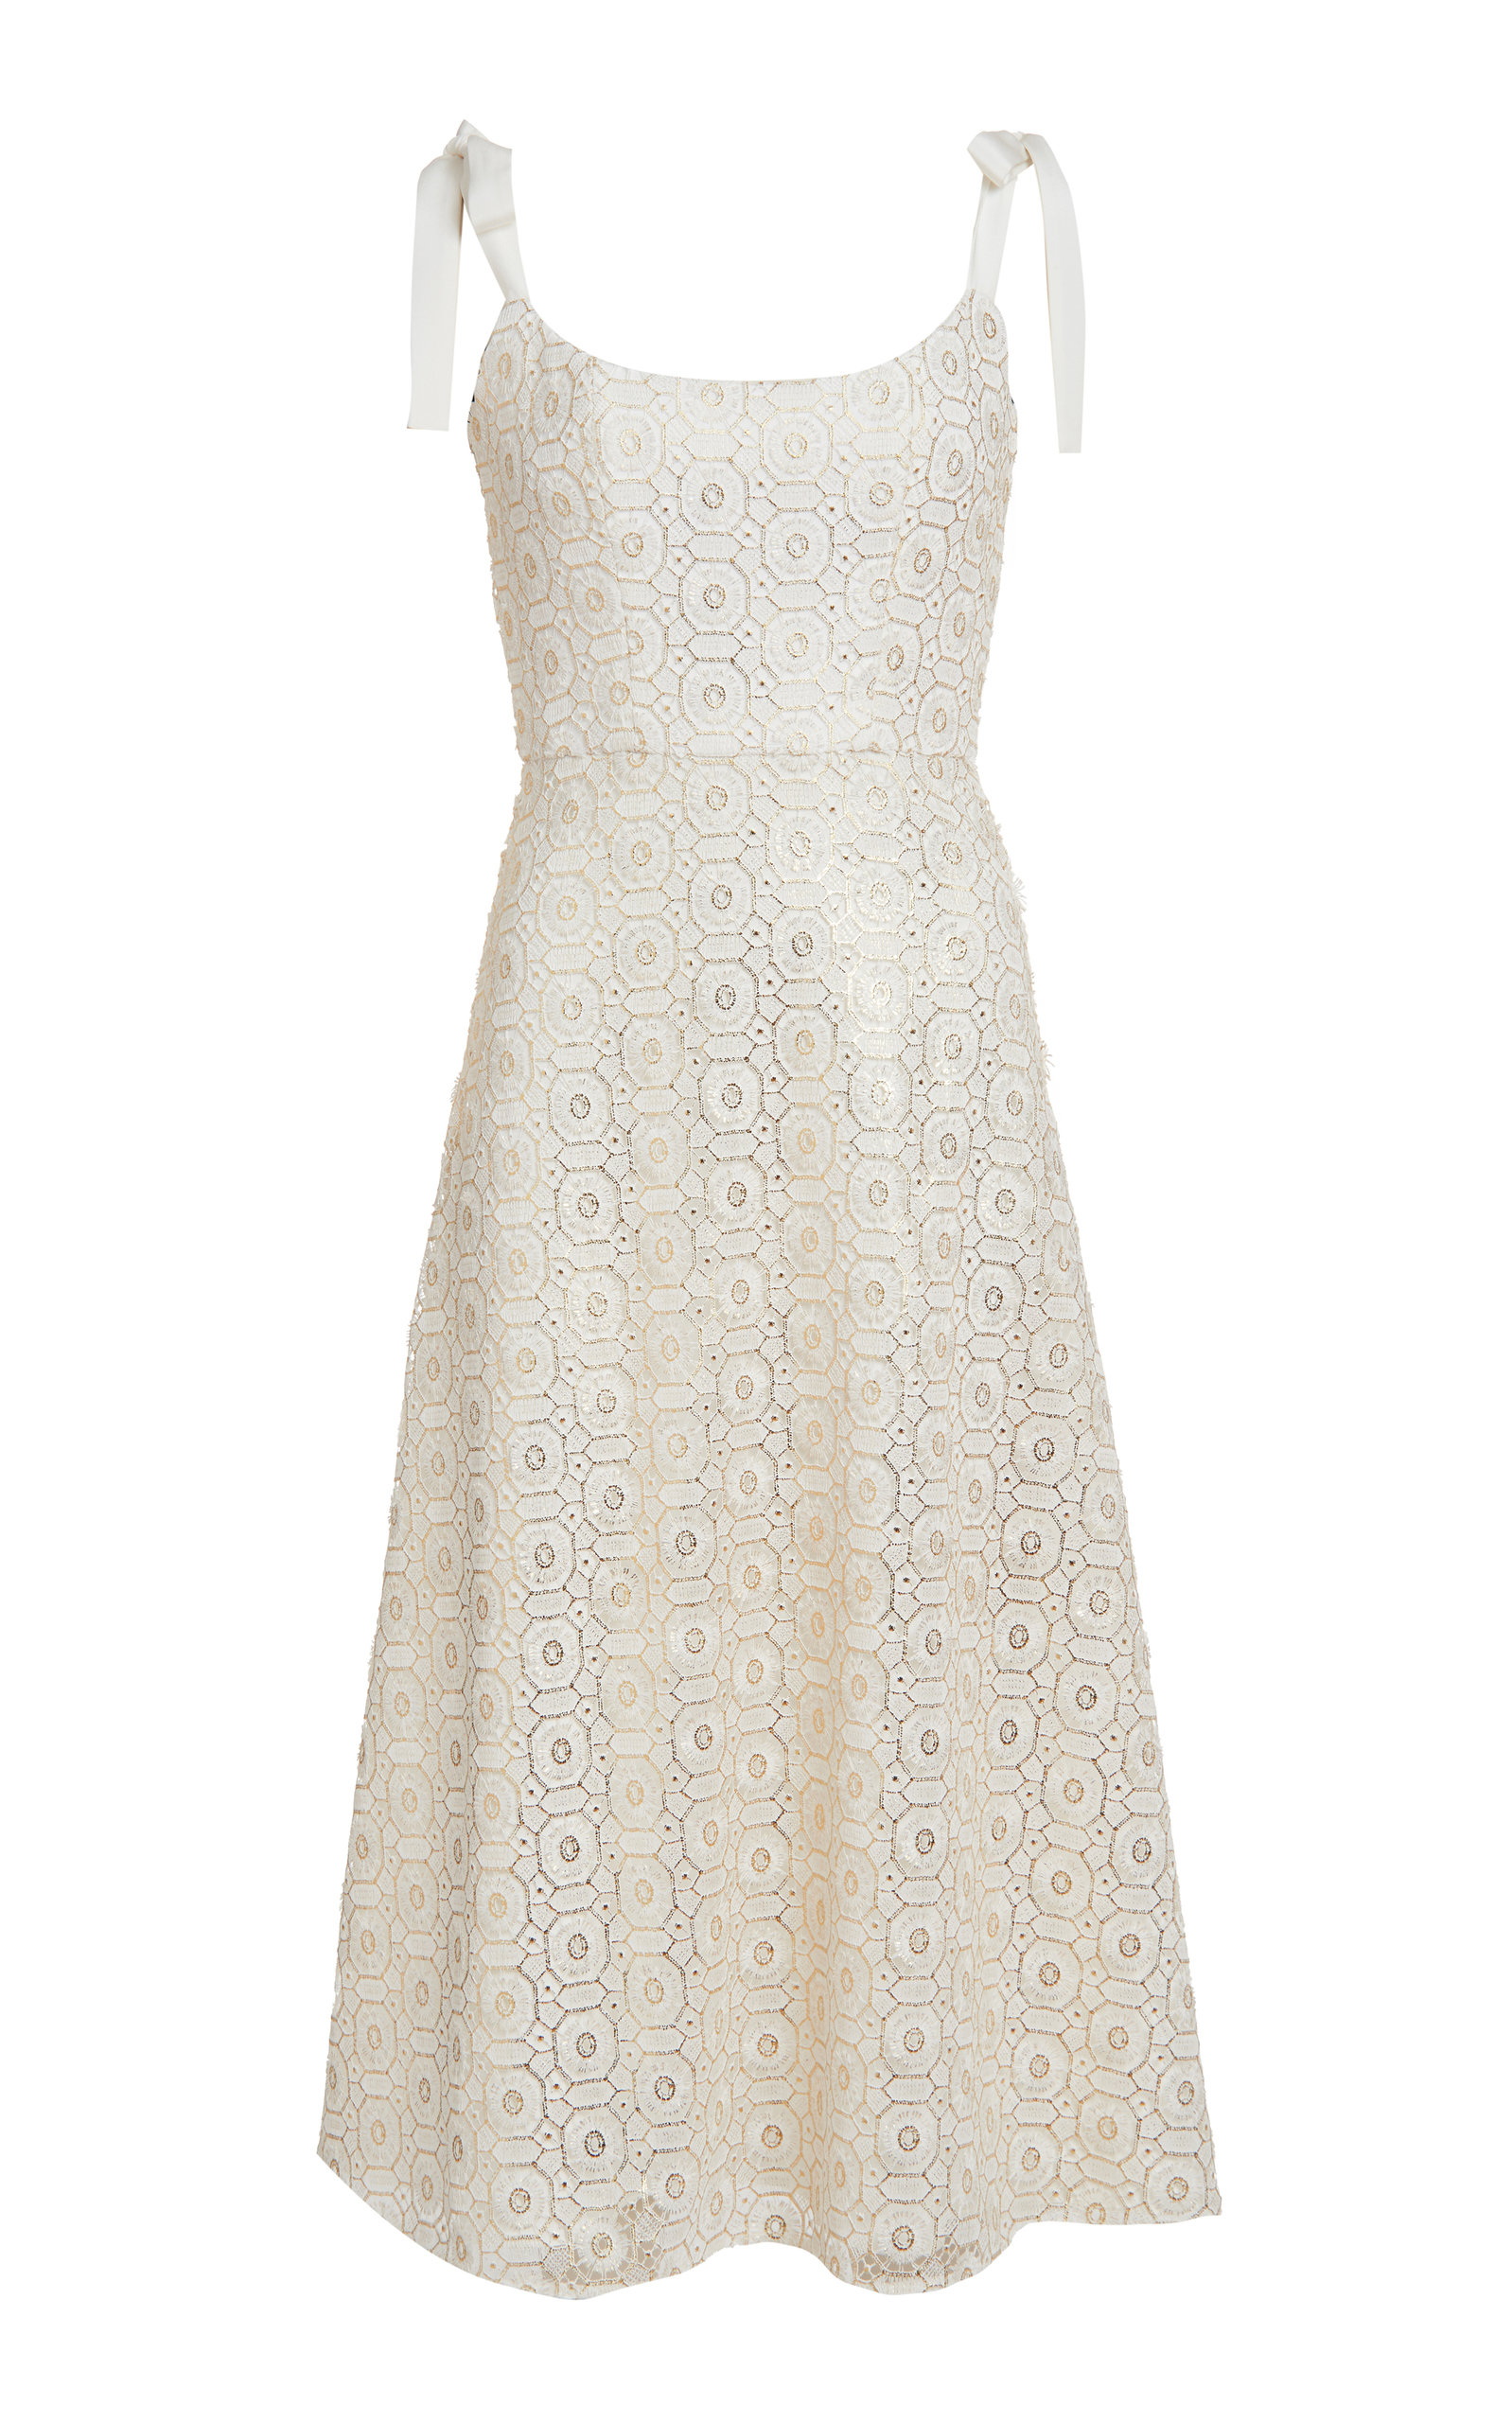 Operandi for Markarian - Women's Elliot Lace Midi Dress - White - Only At Moda | AccuWeather Shop